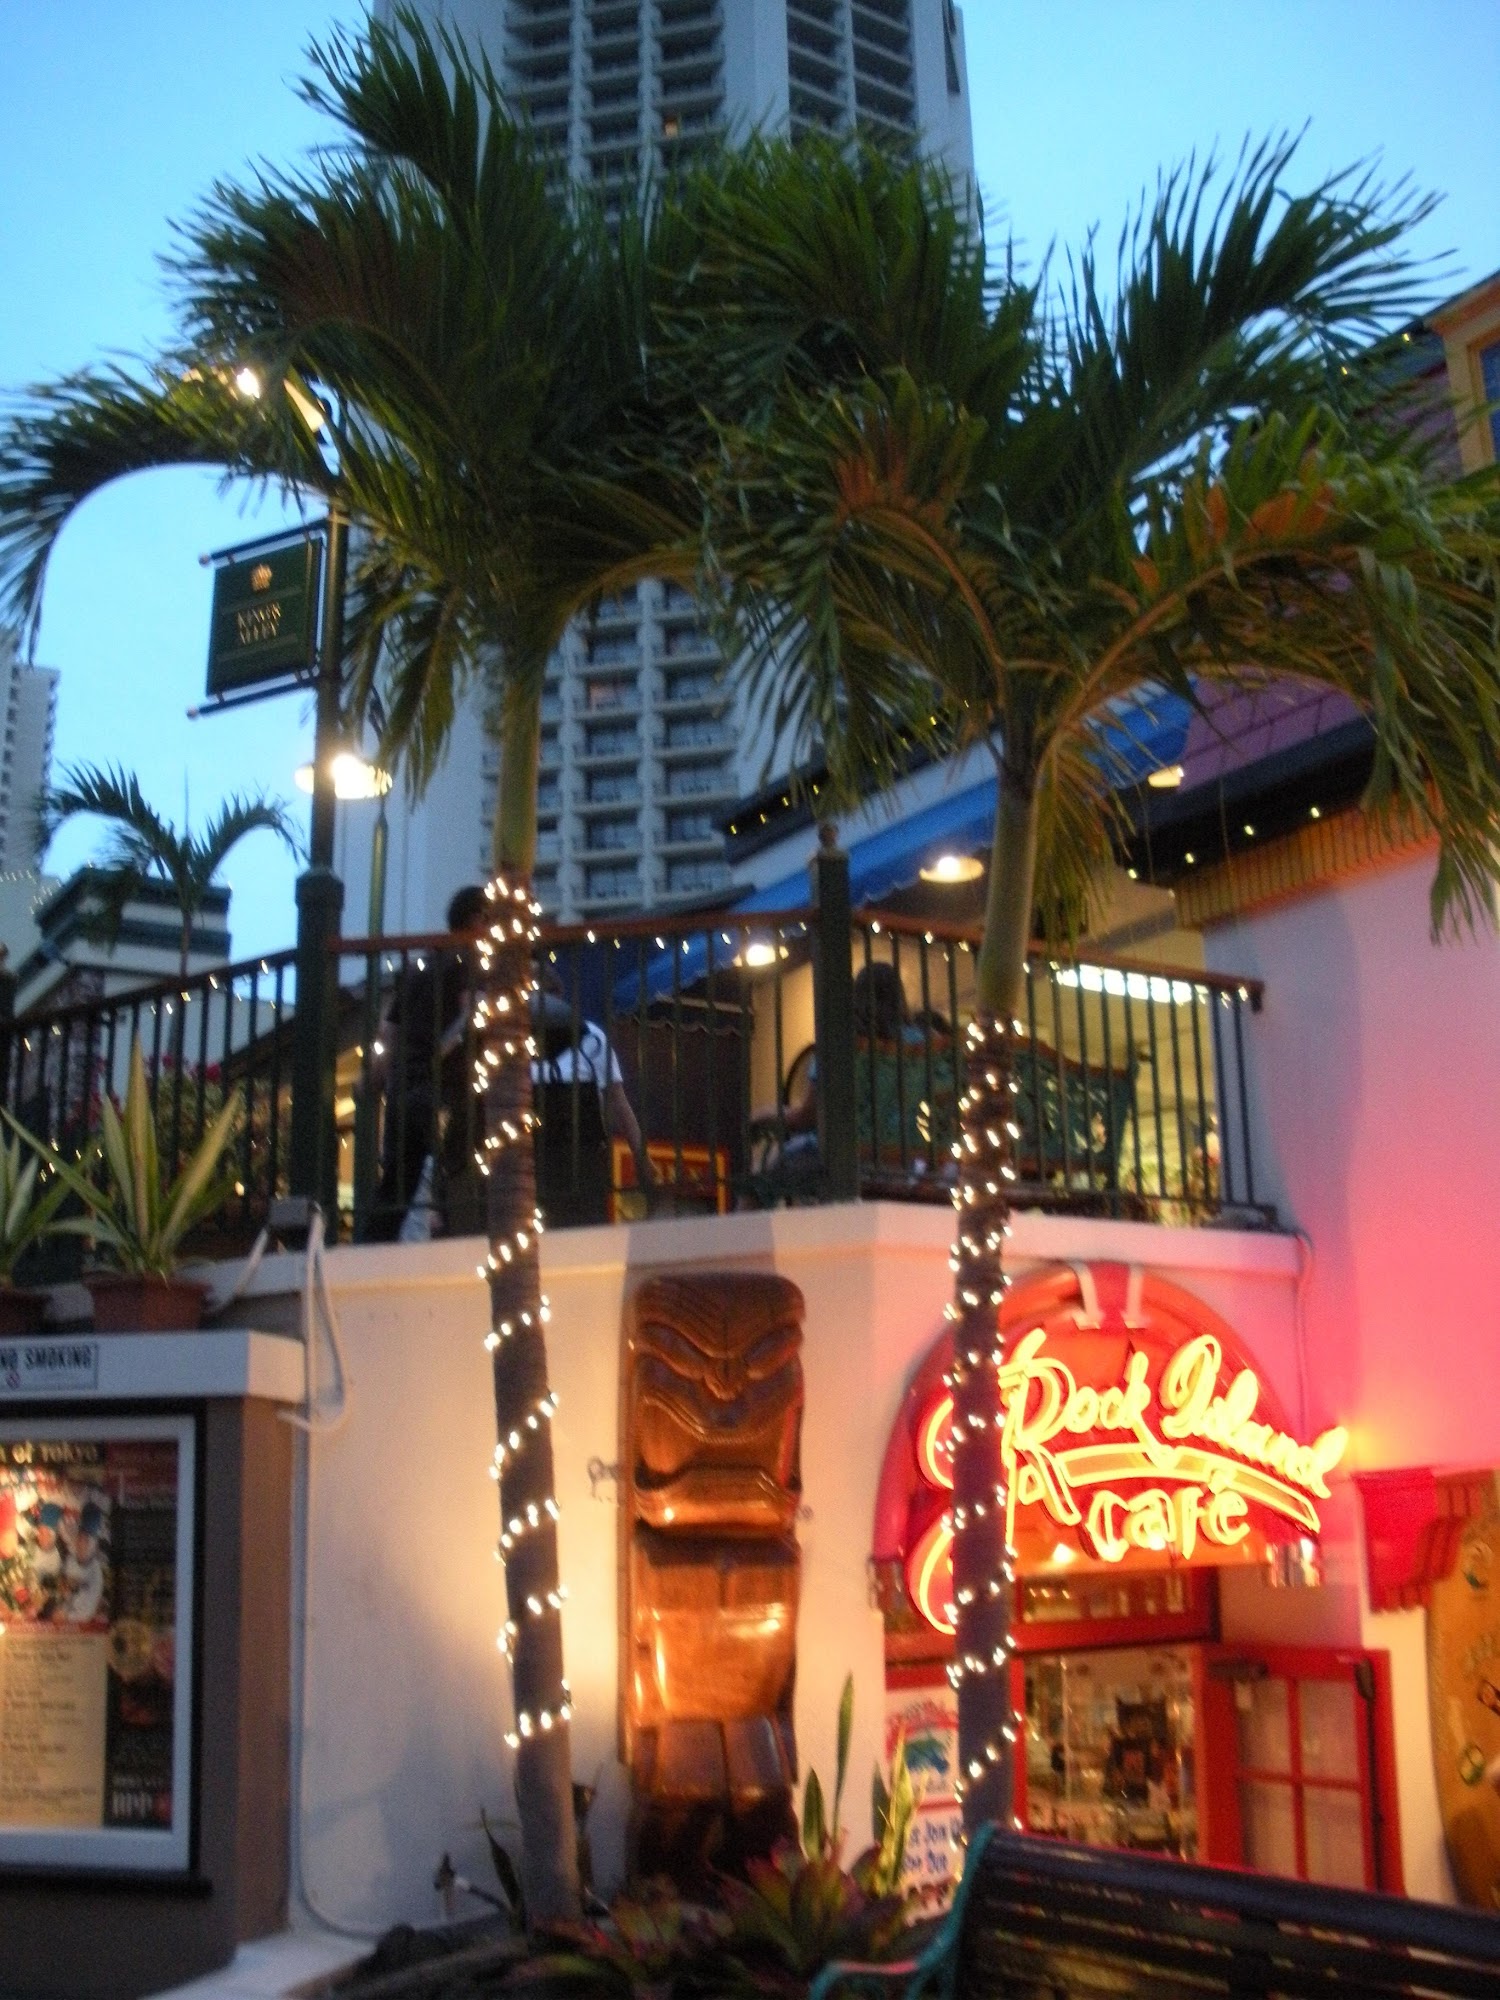 Rock Island Cafe